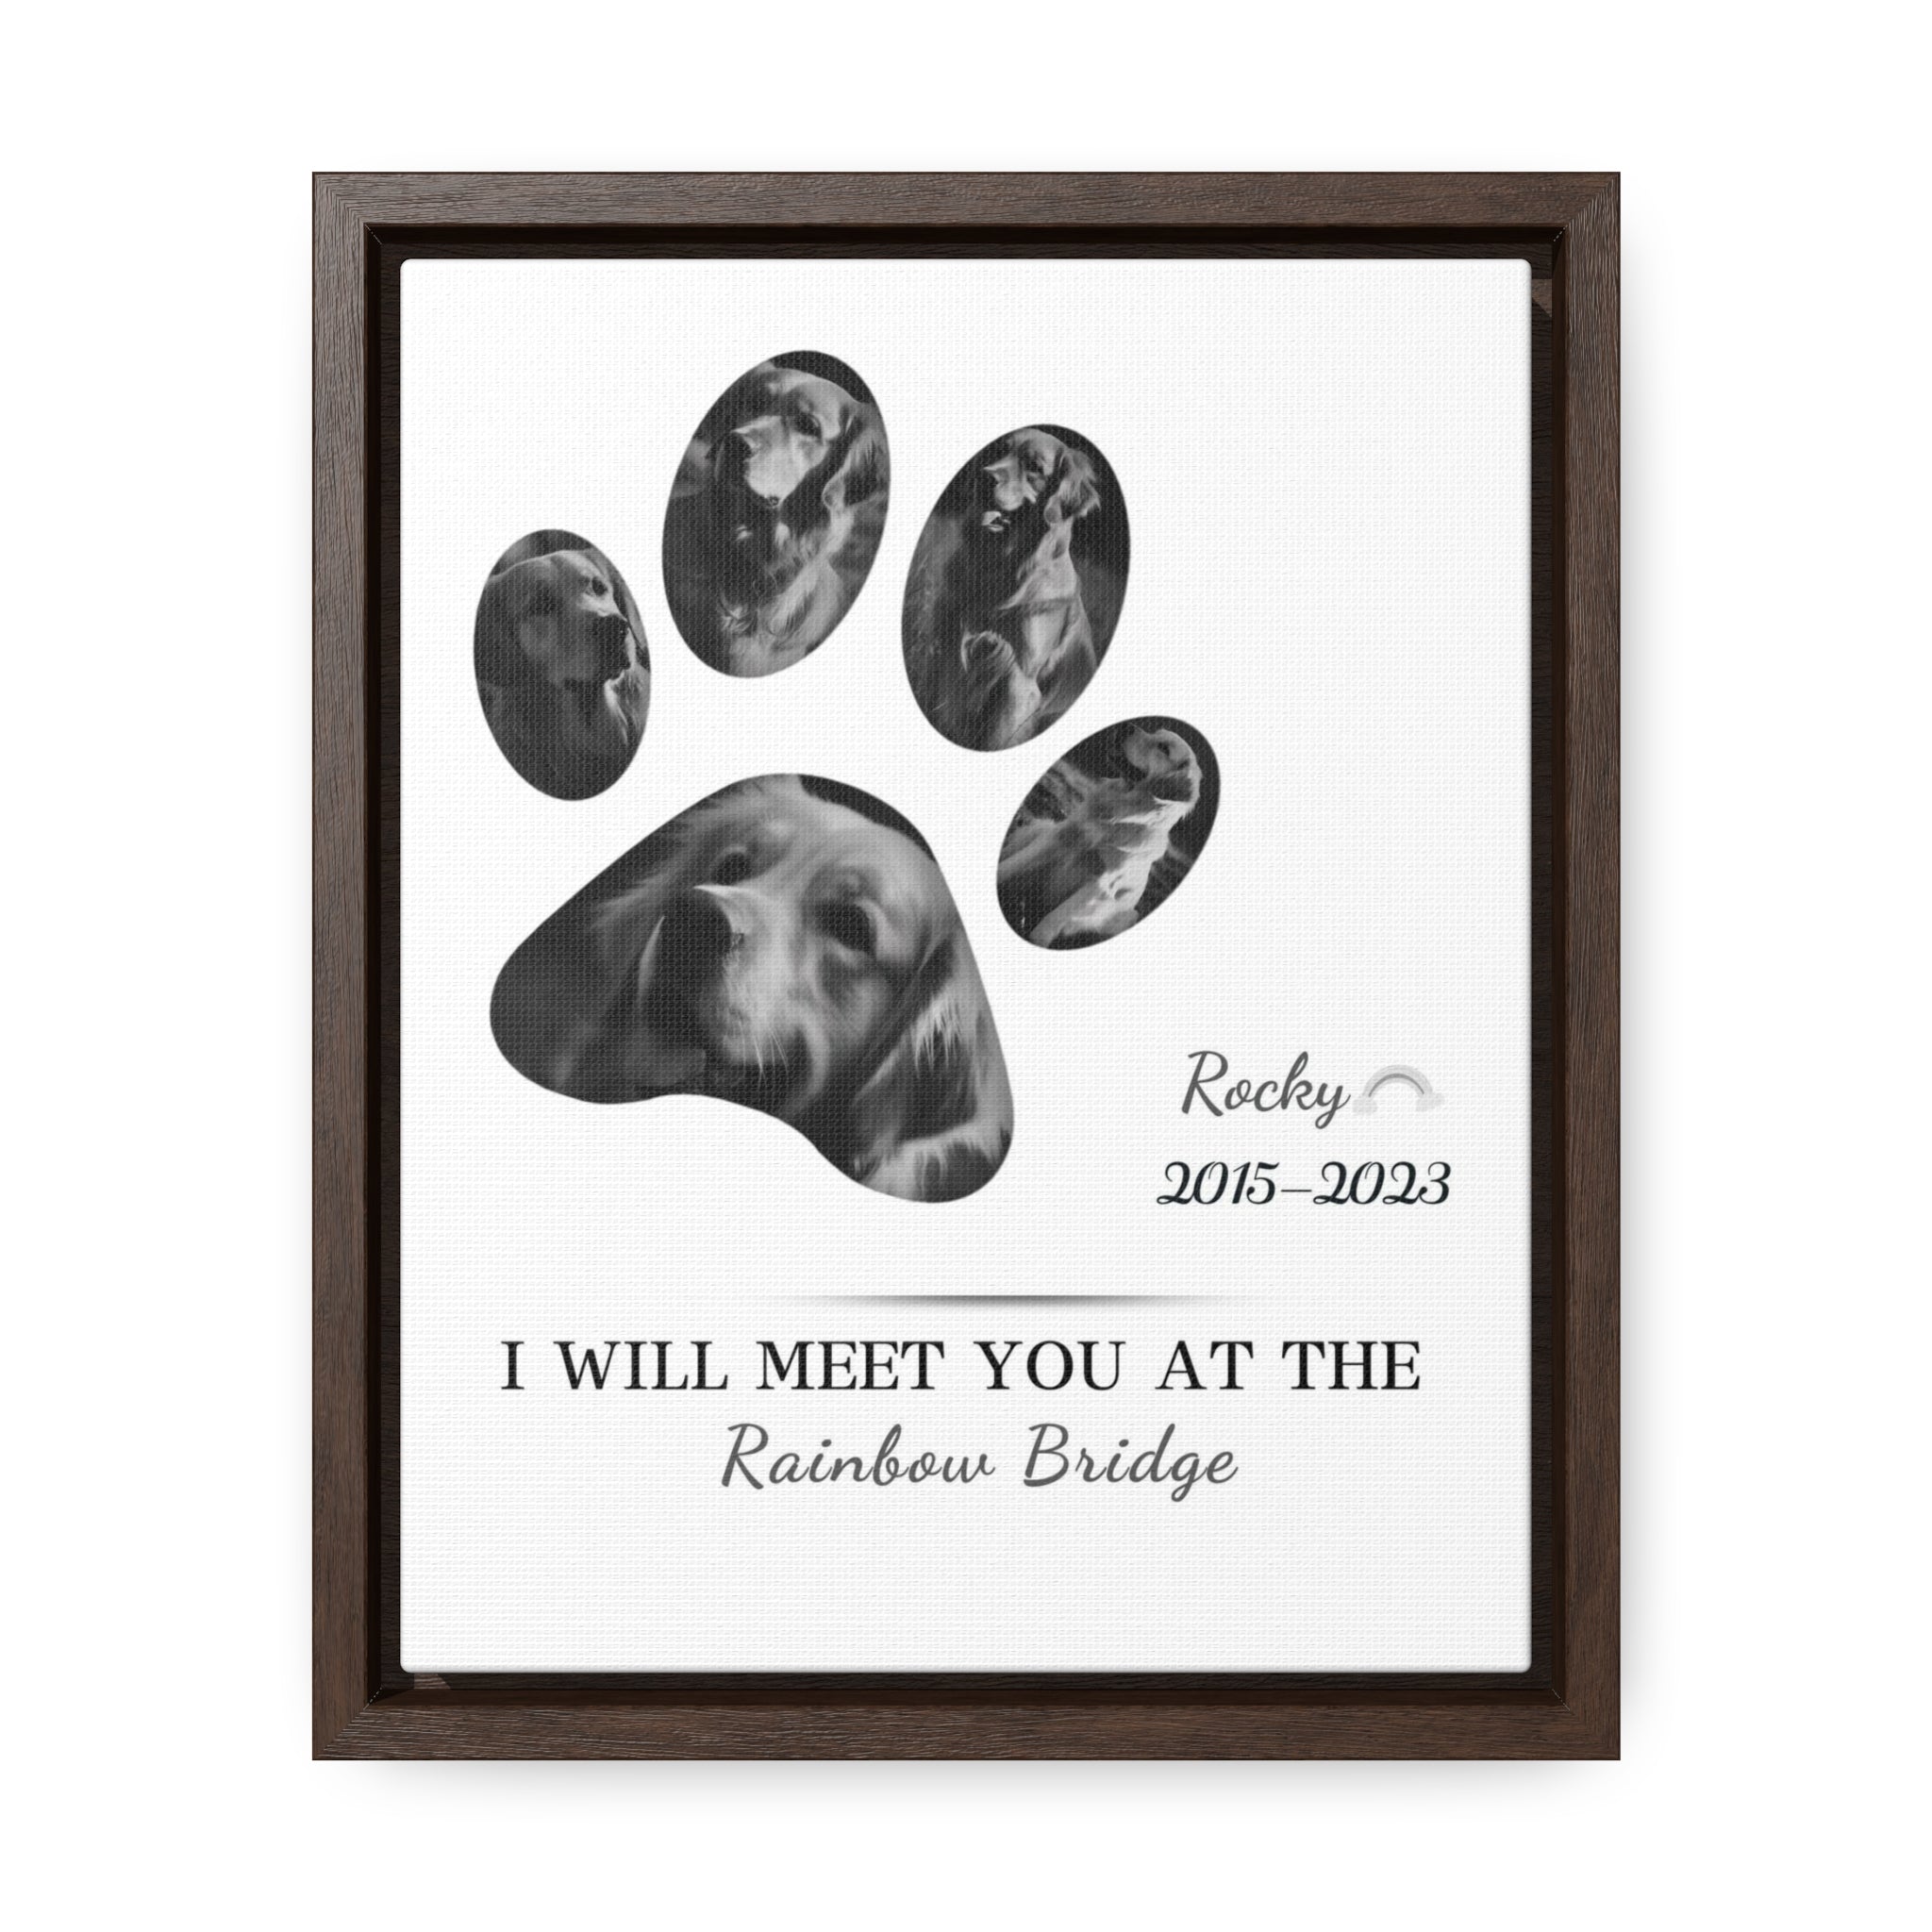 Minimalist Dog Paw Print - Personalized Canvas Print Pet Memorial